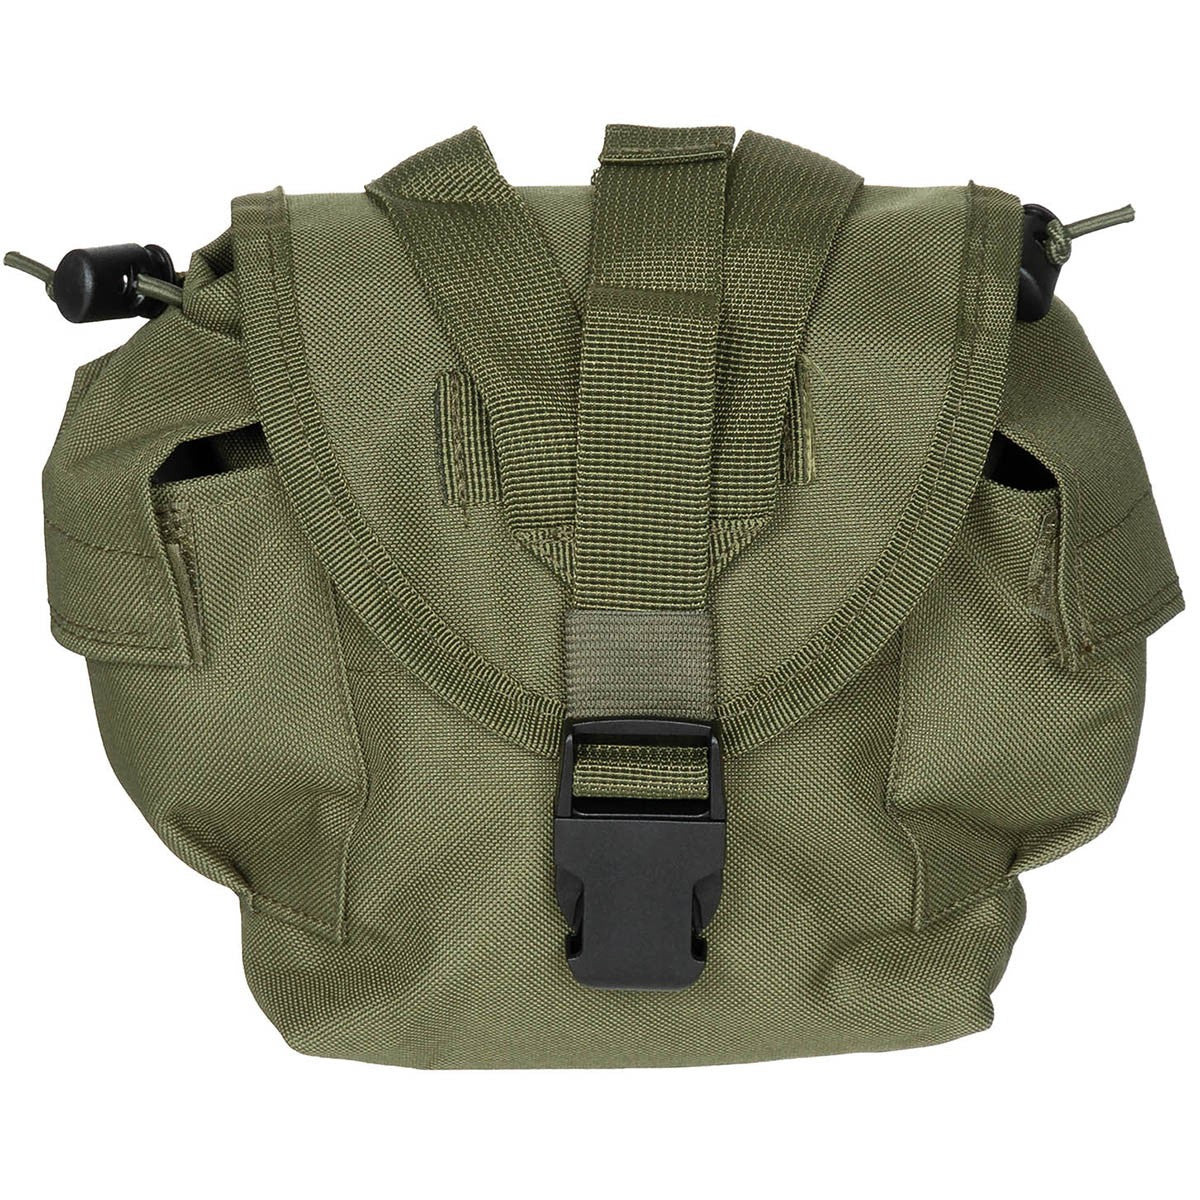 Hiking kit Premium Katadyn water filter with bottle Bottle bag and tactical belt